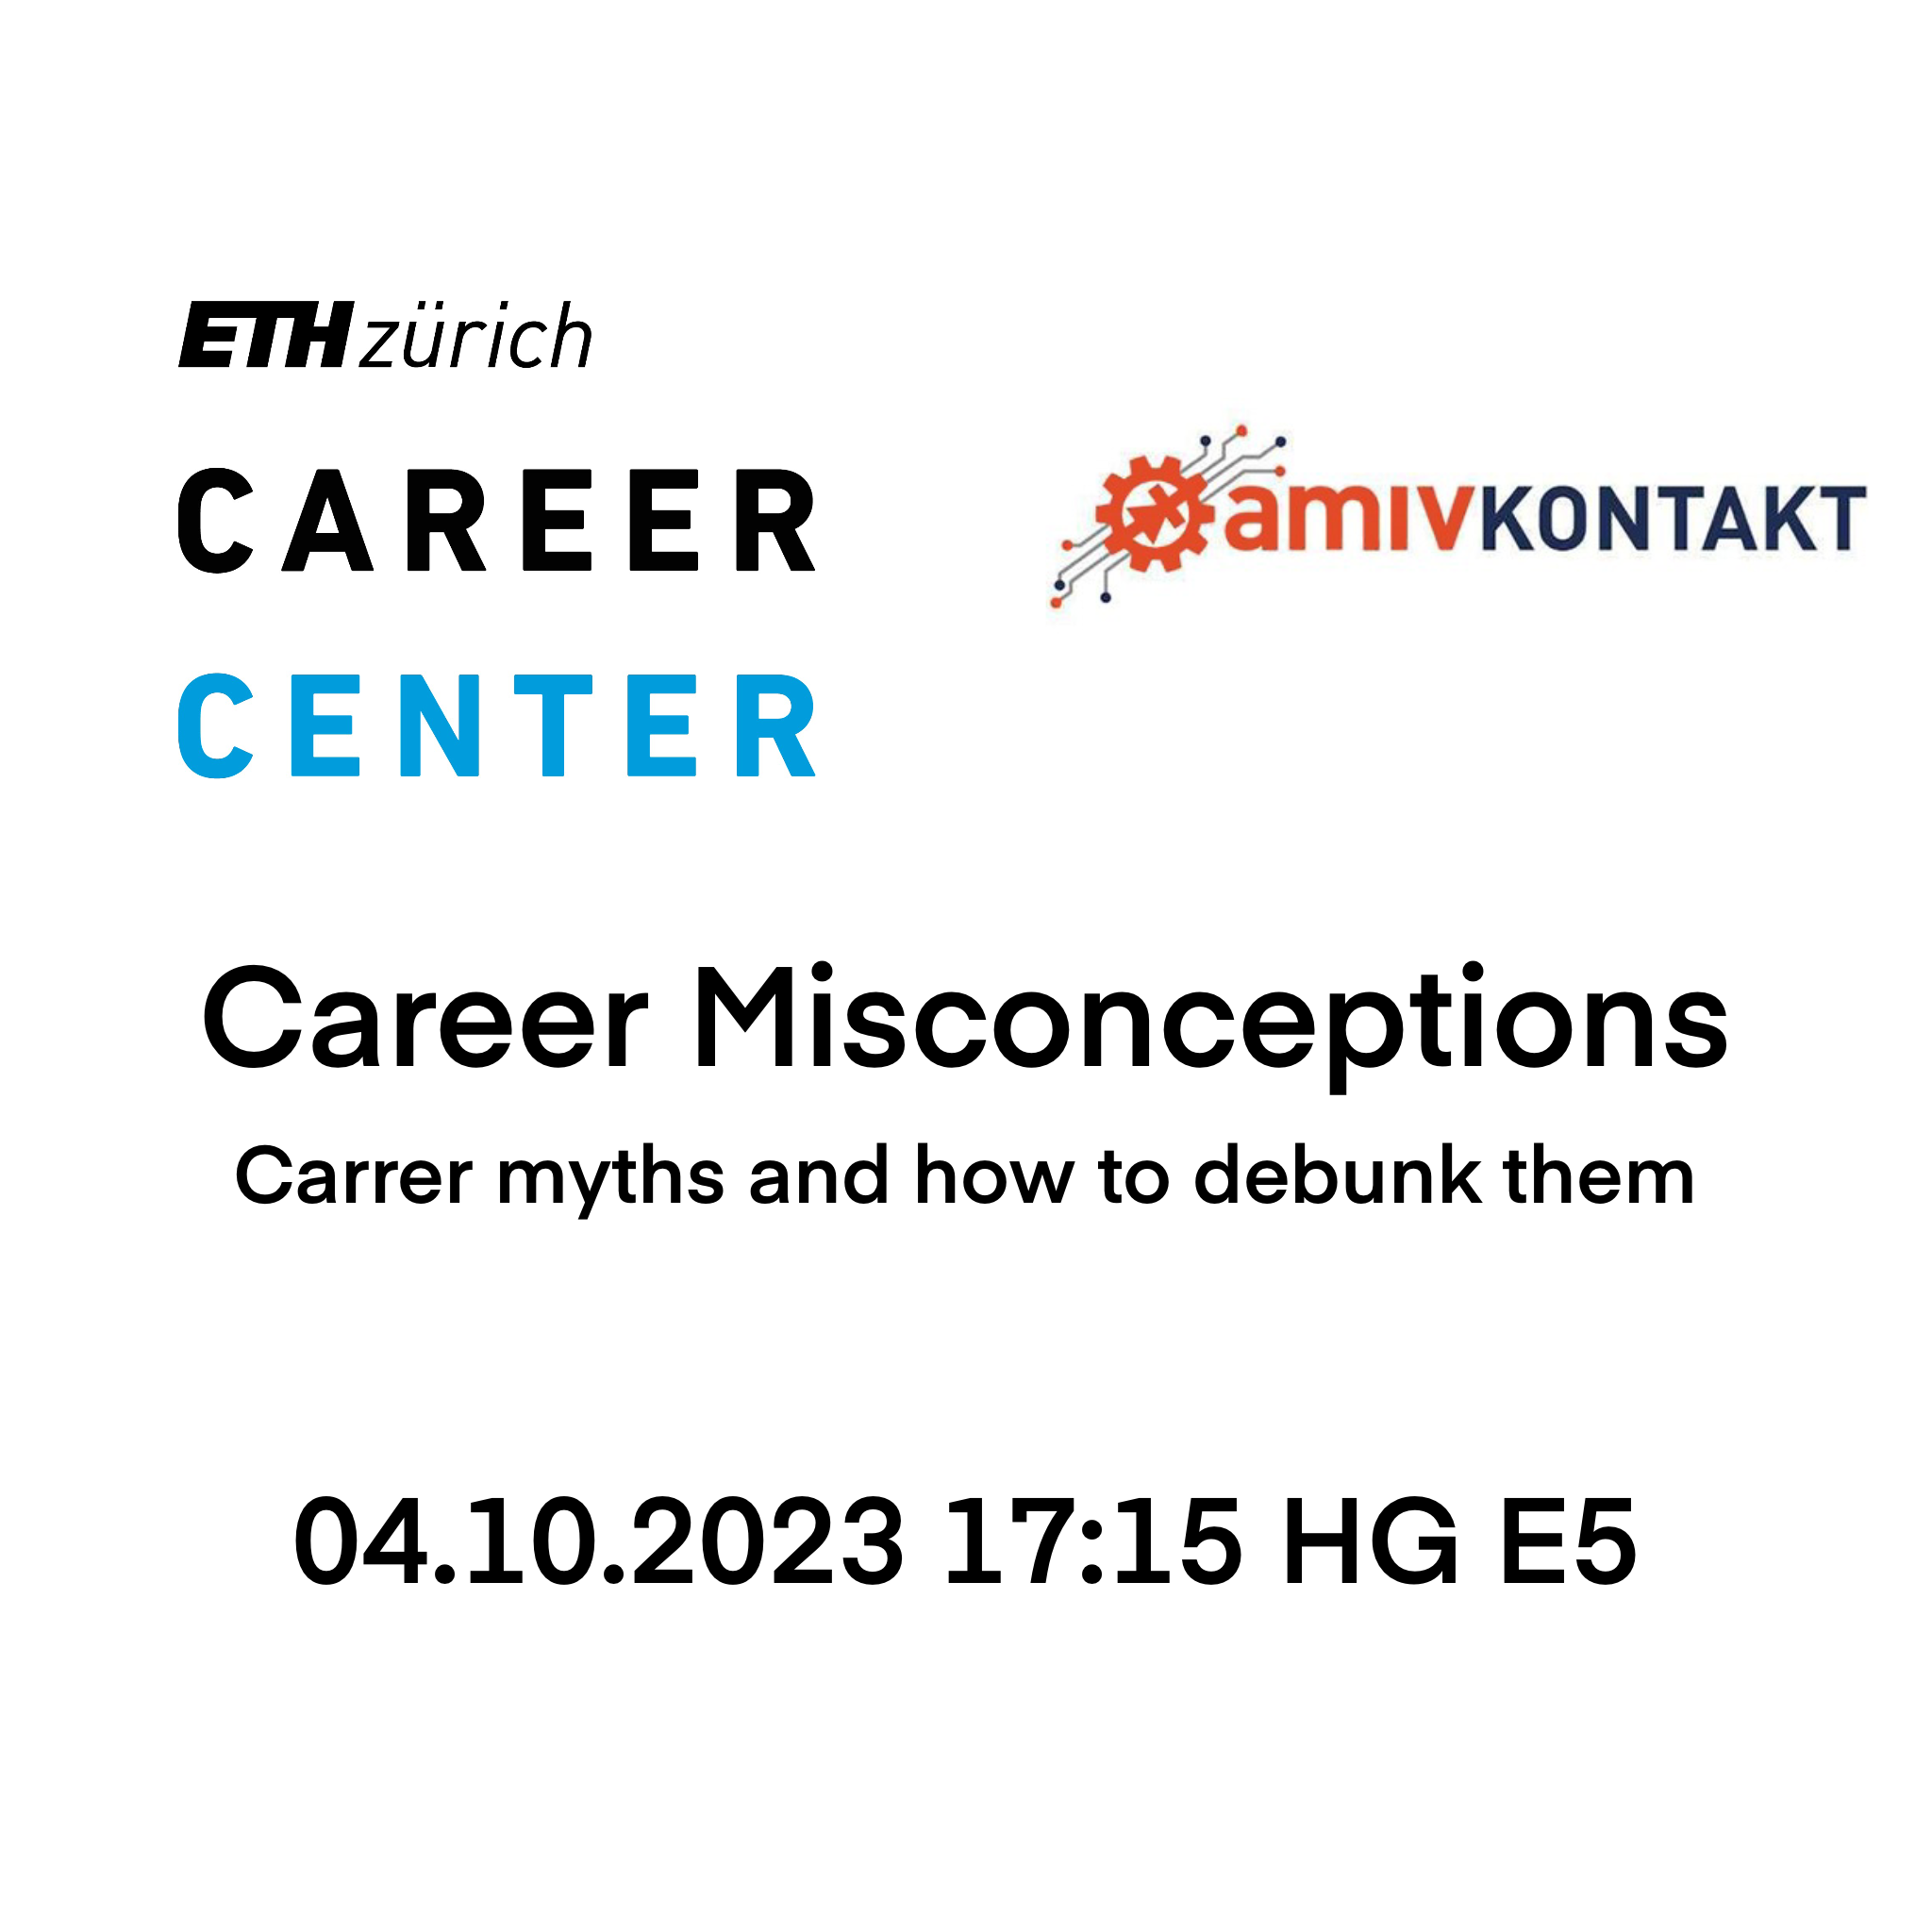 Kontakt 2023: Career Misconceptions